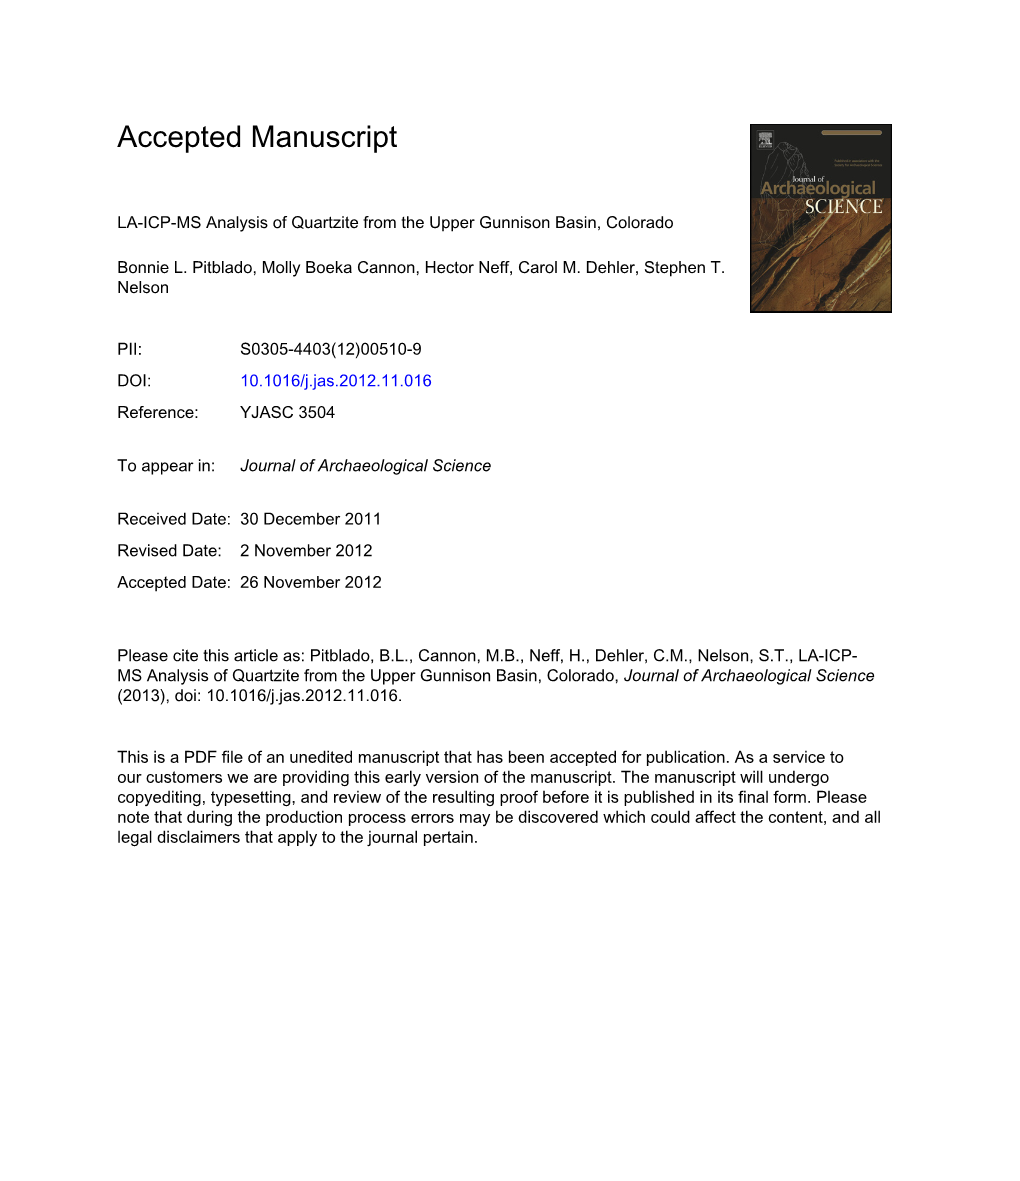 LA-ICP-MS Analysis of Quartzite from the Upper Gunnison Basin, Colorado